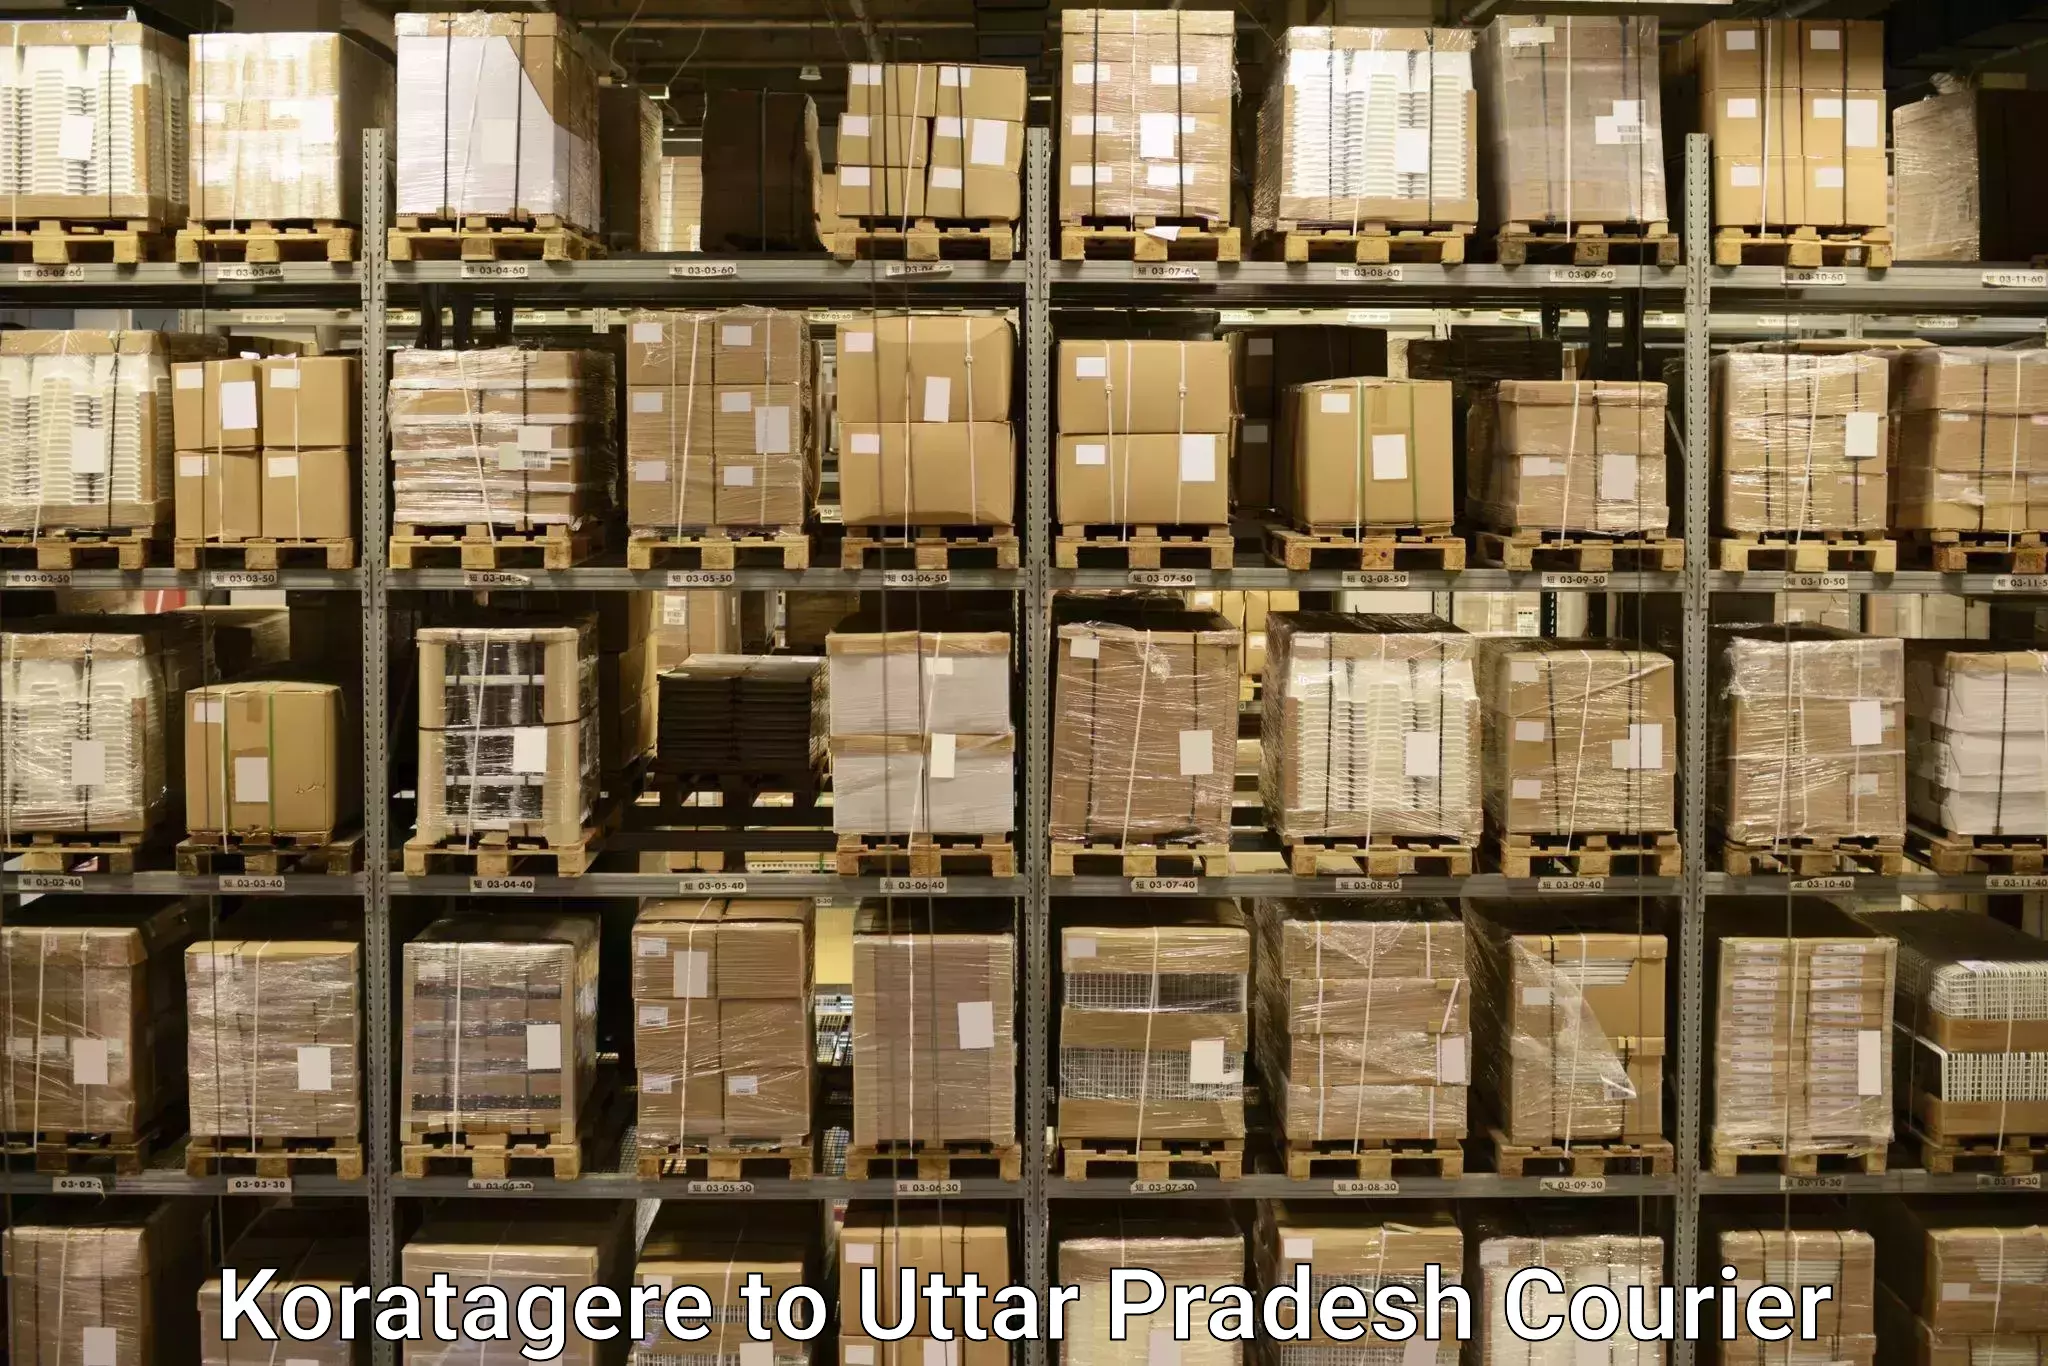 Baggage relocation service Koratagere to IIT Varanasi